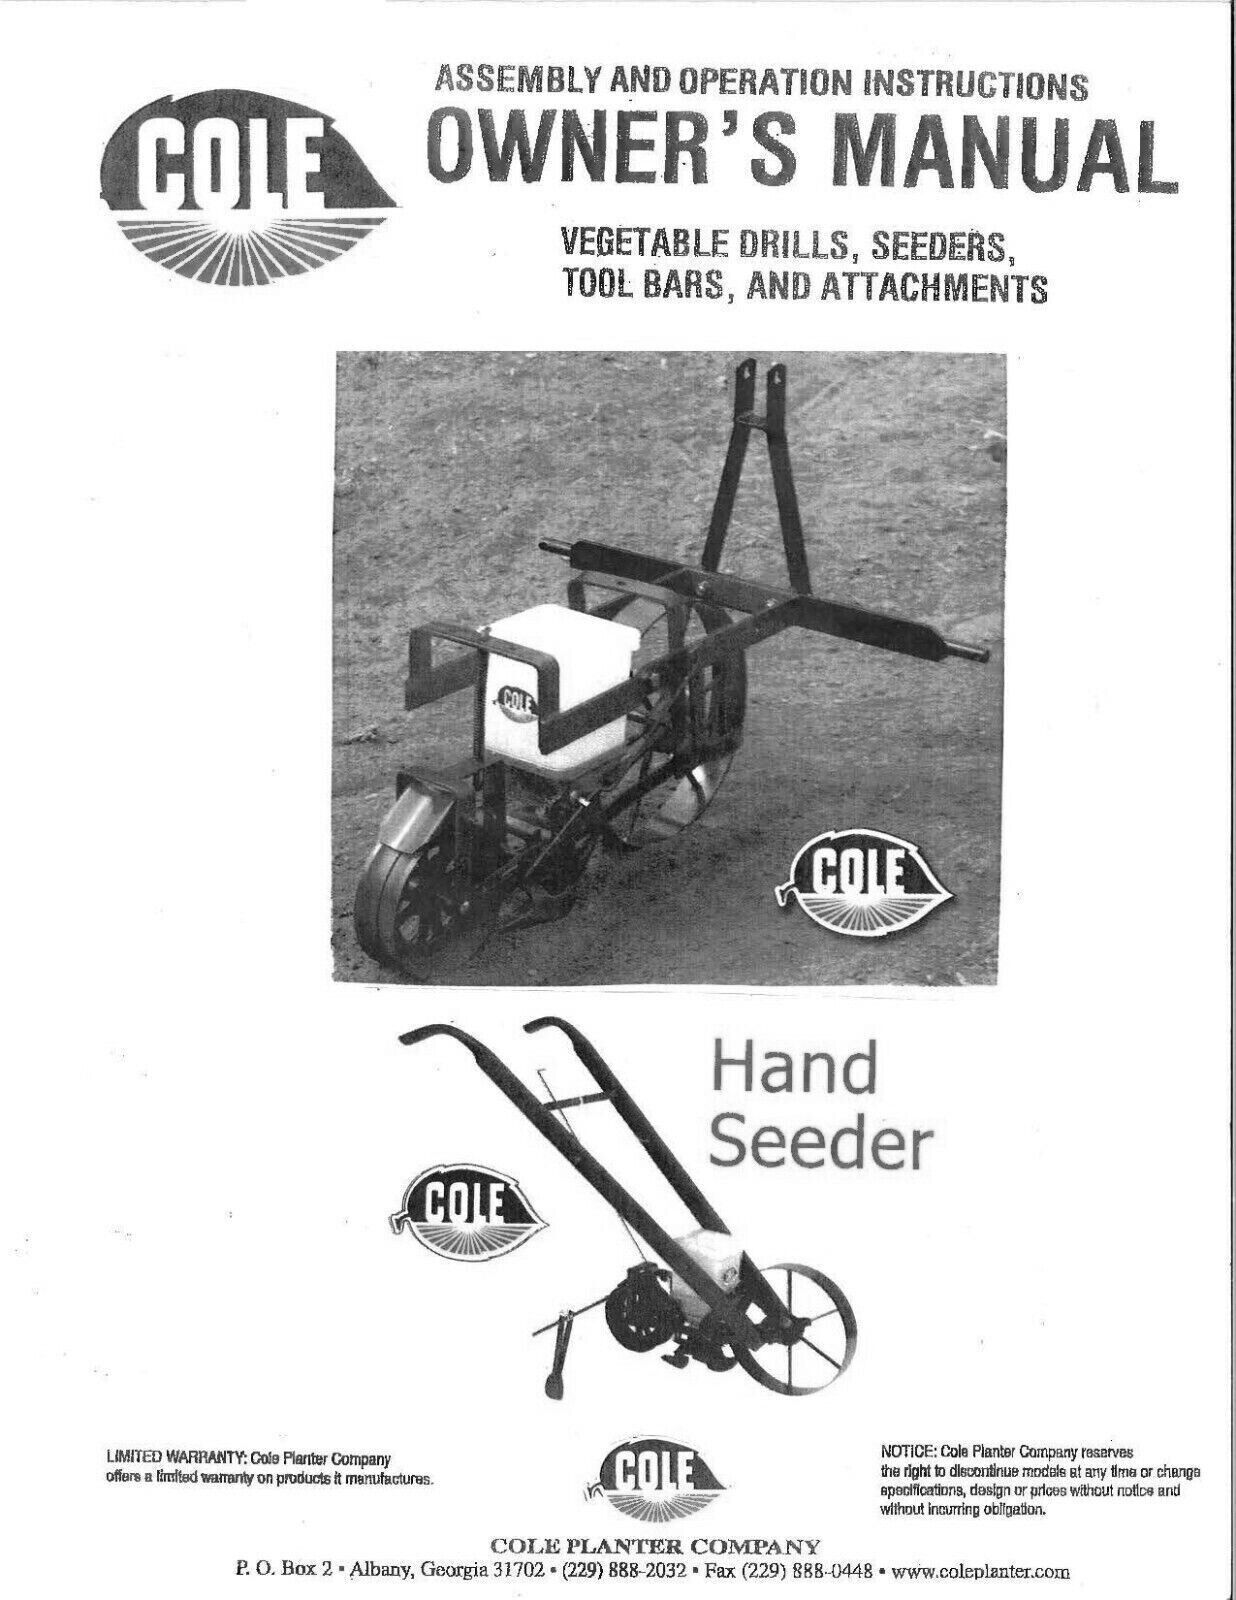 Owner Operator Maintenance Manual Fits Cole Garden Planter - Hand Seeder